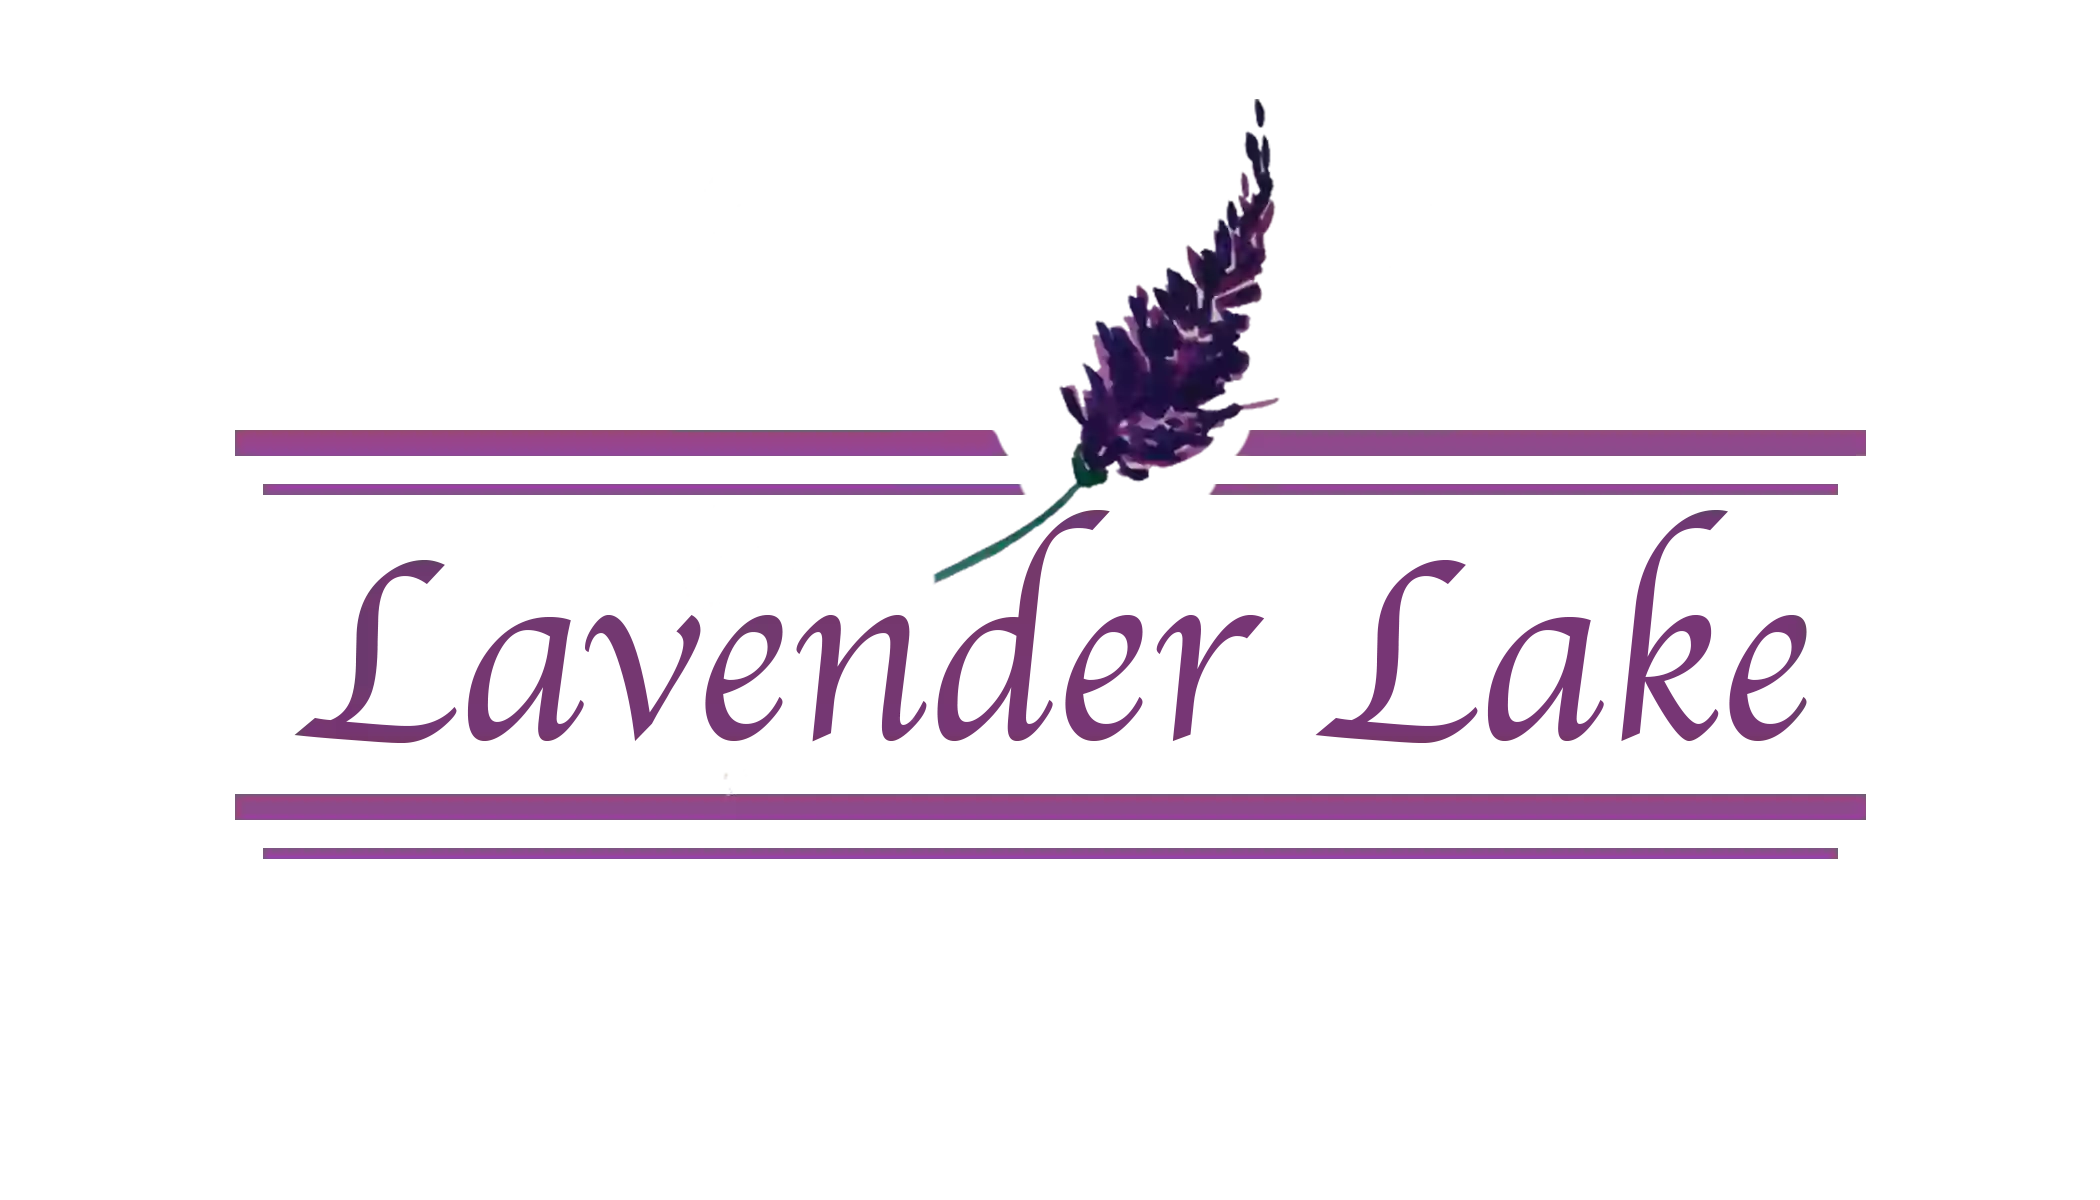 Lavender Lake